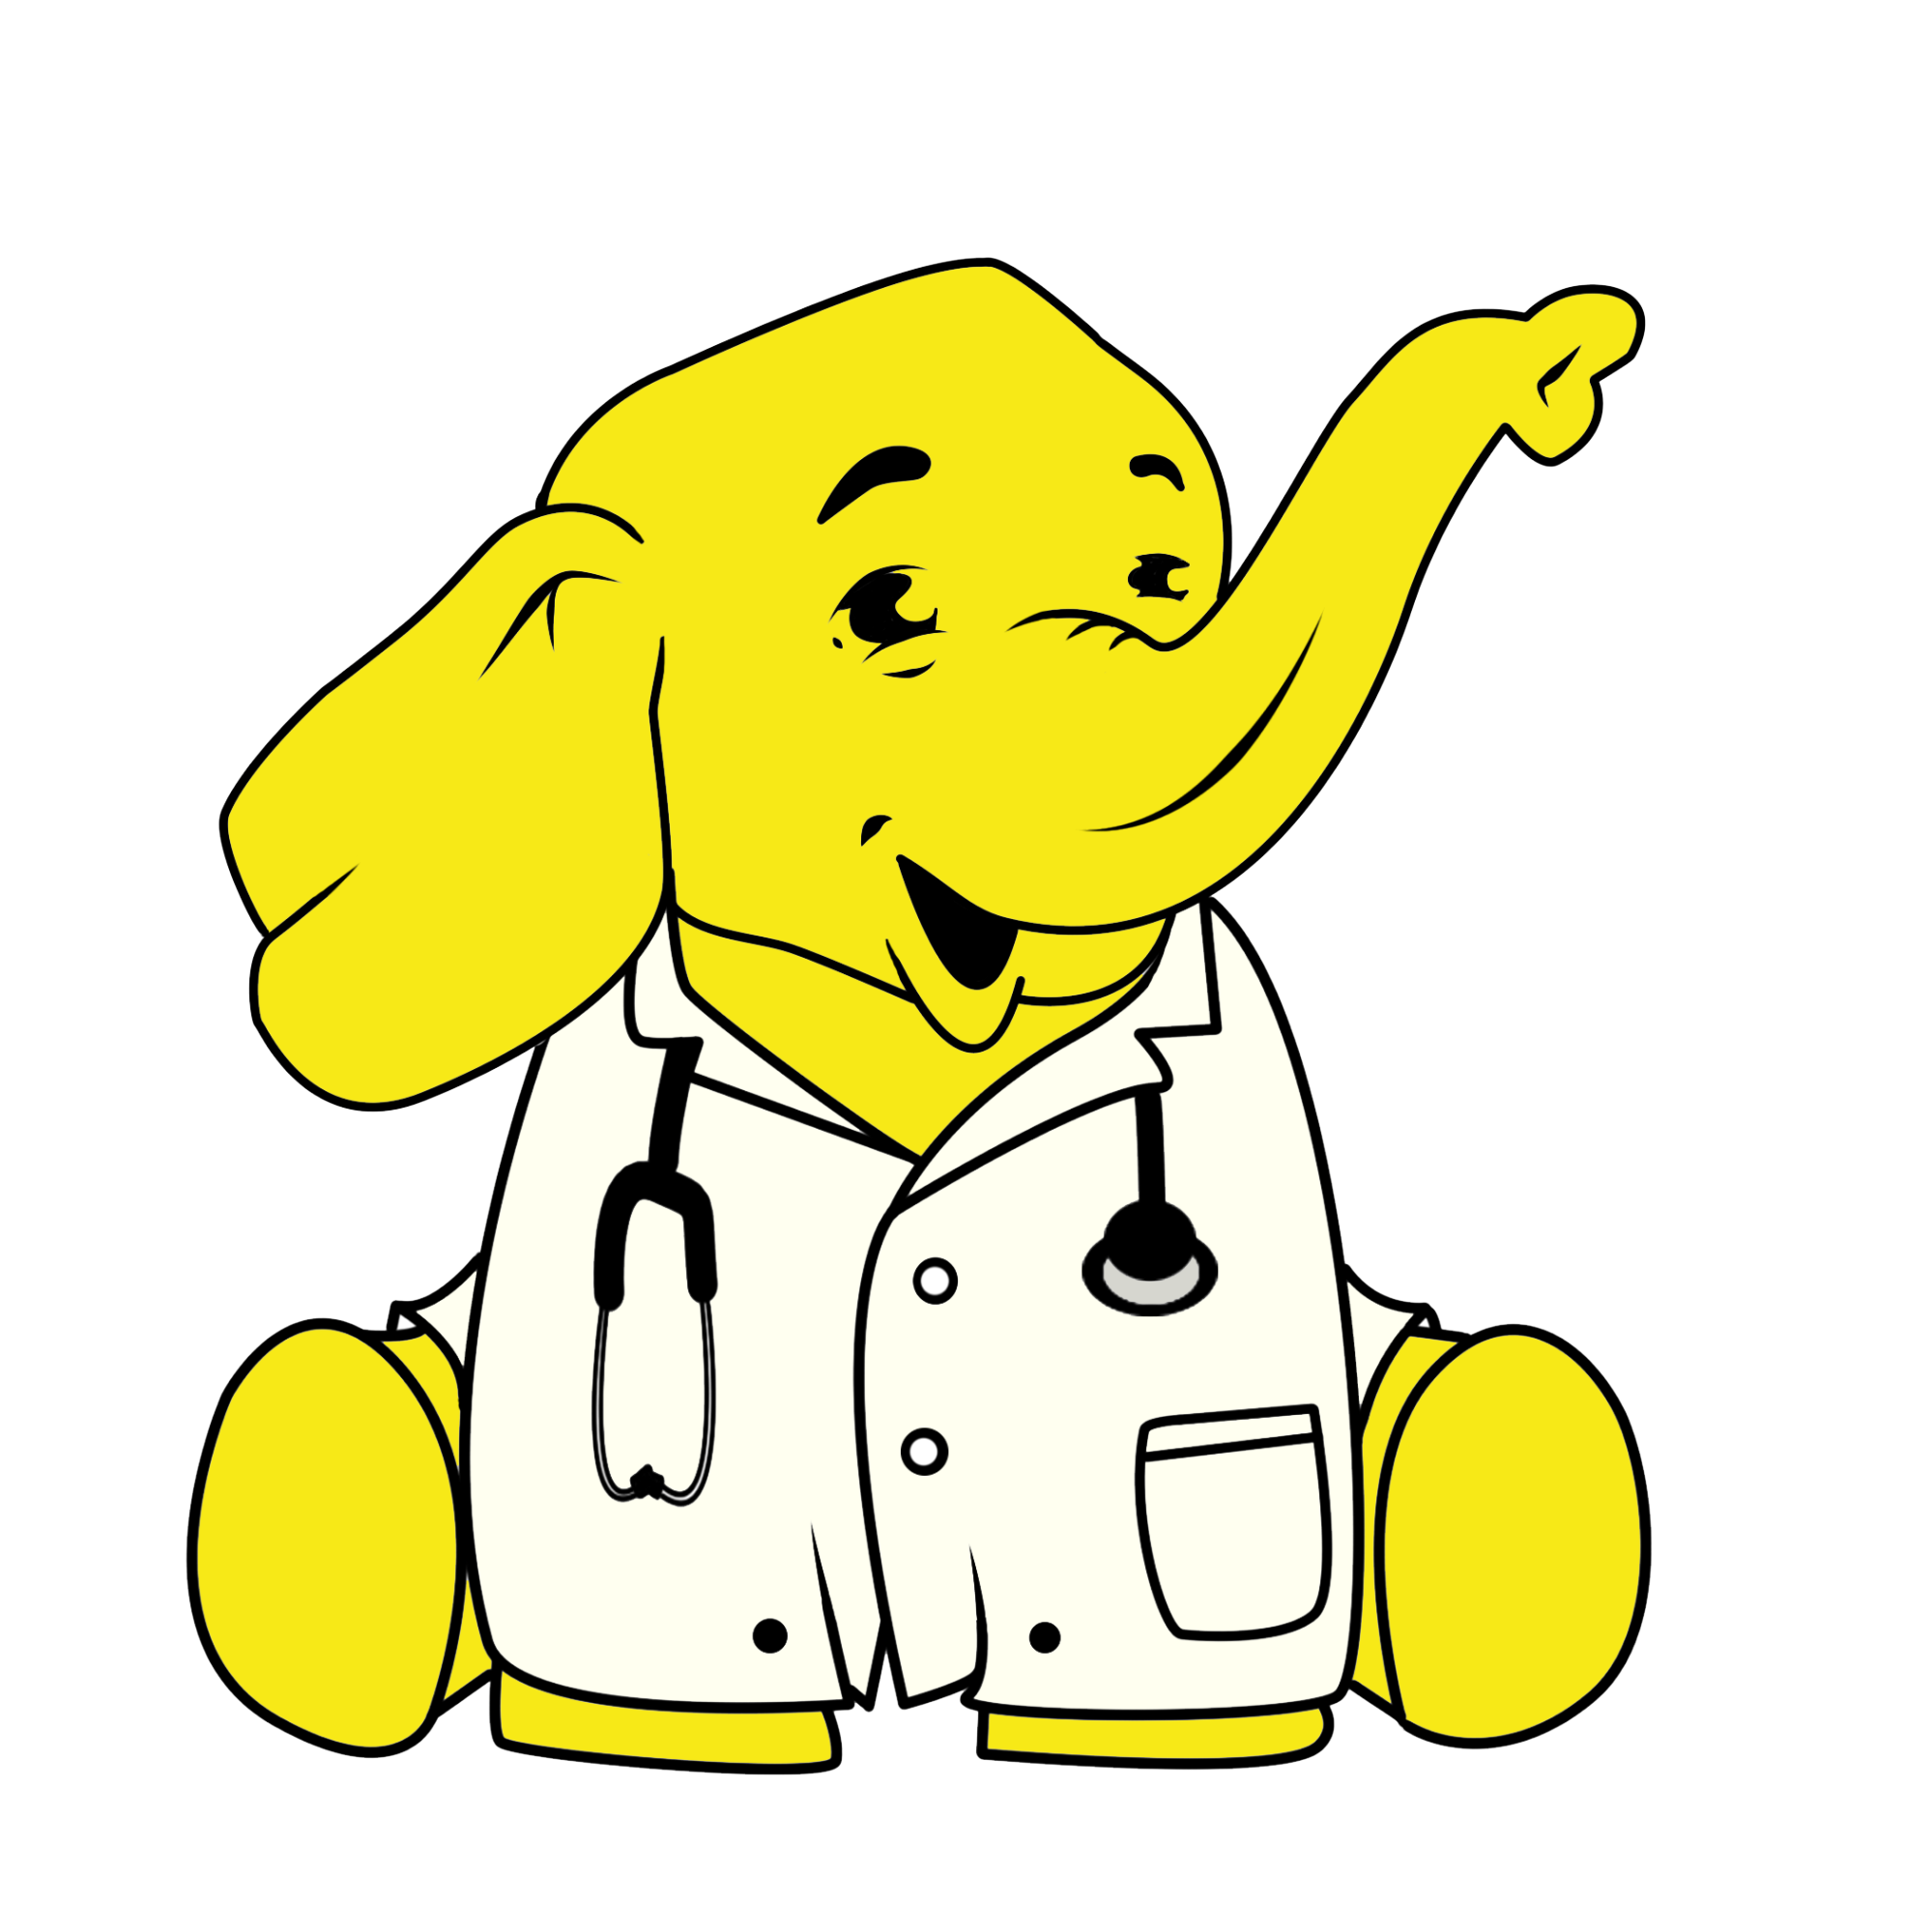 Dr. Elephant